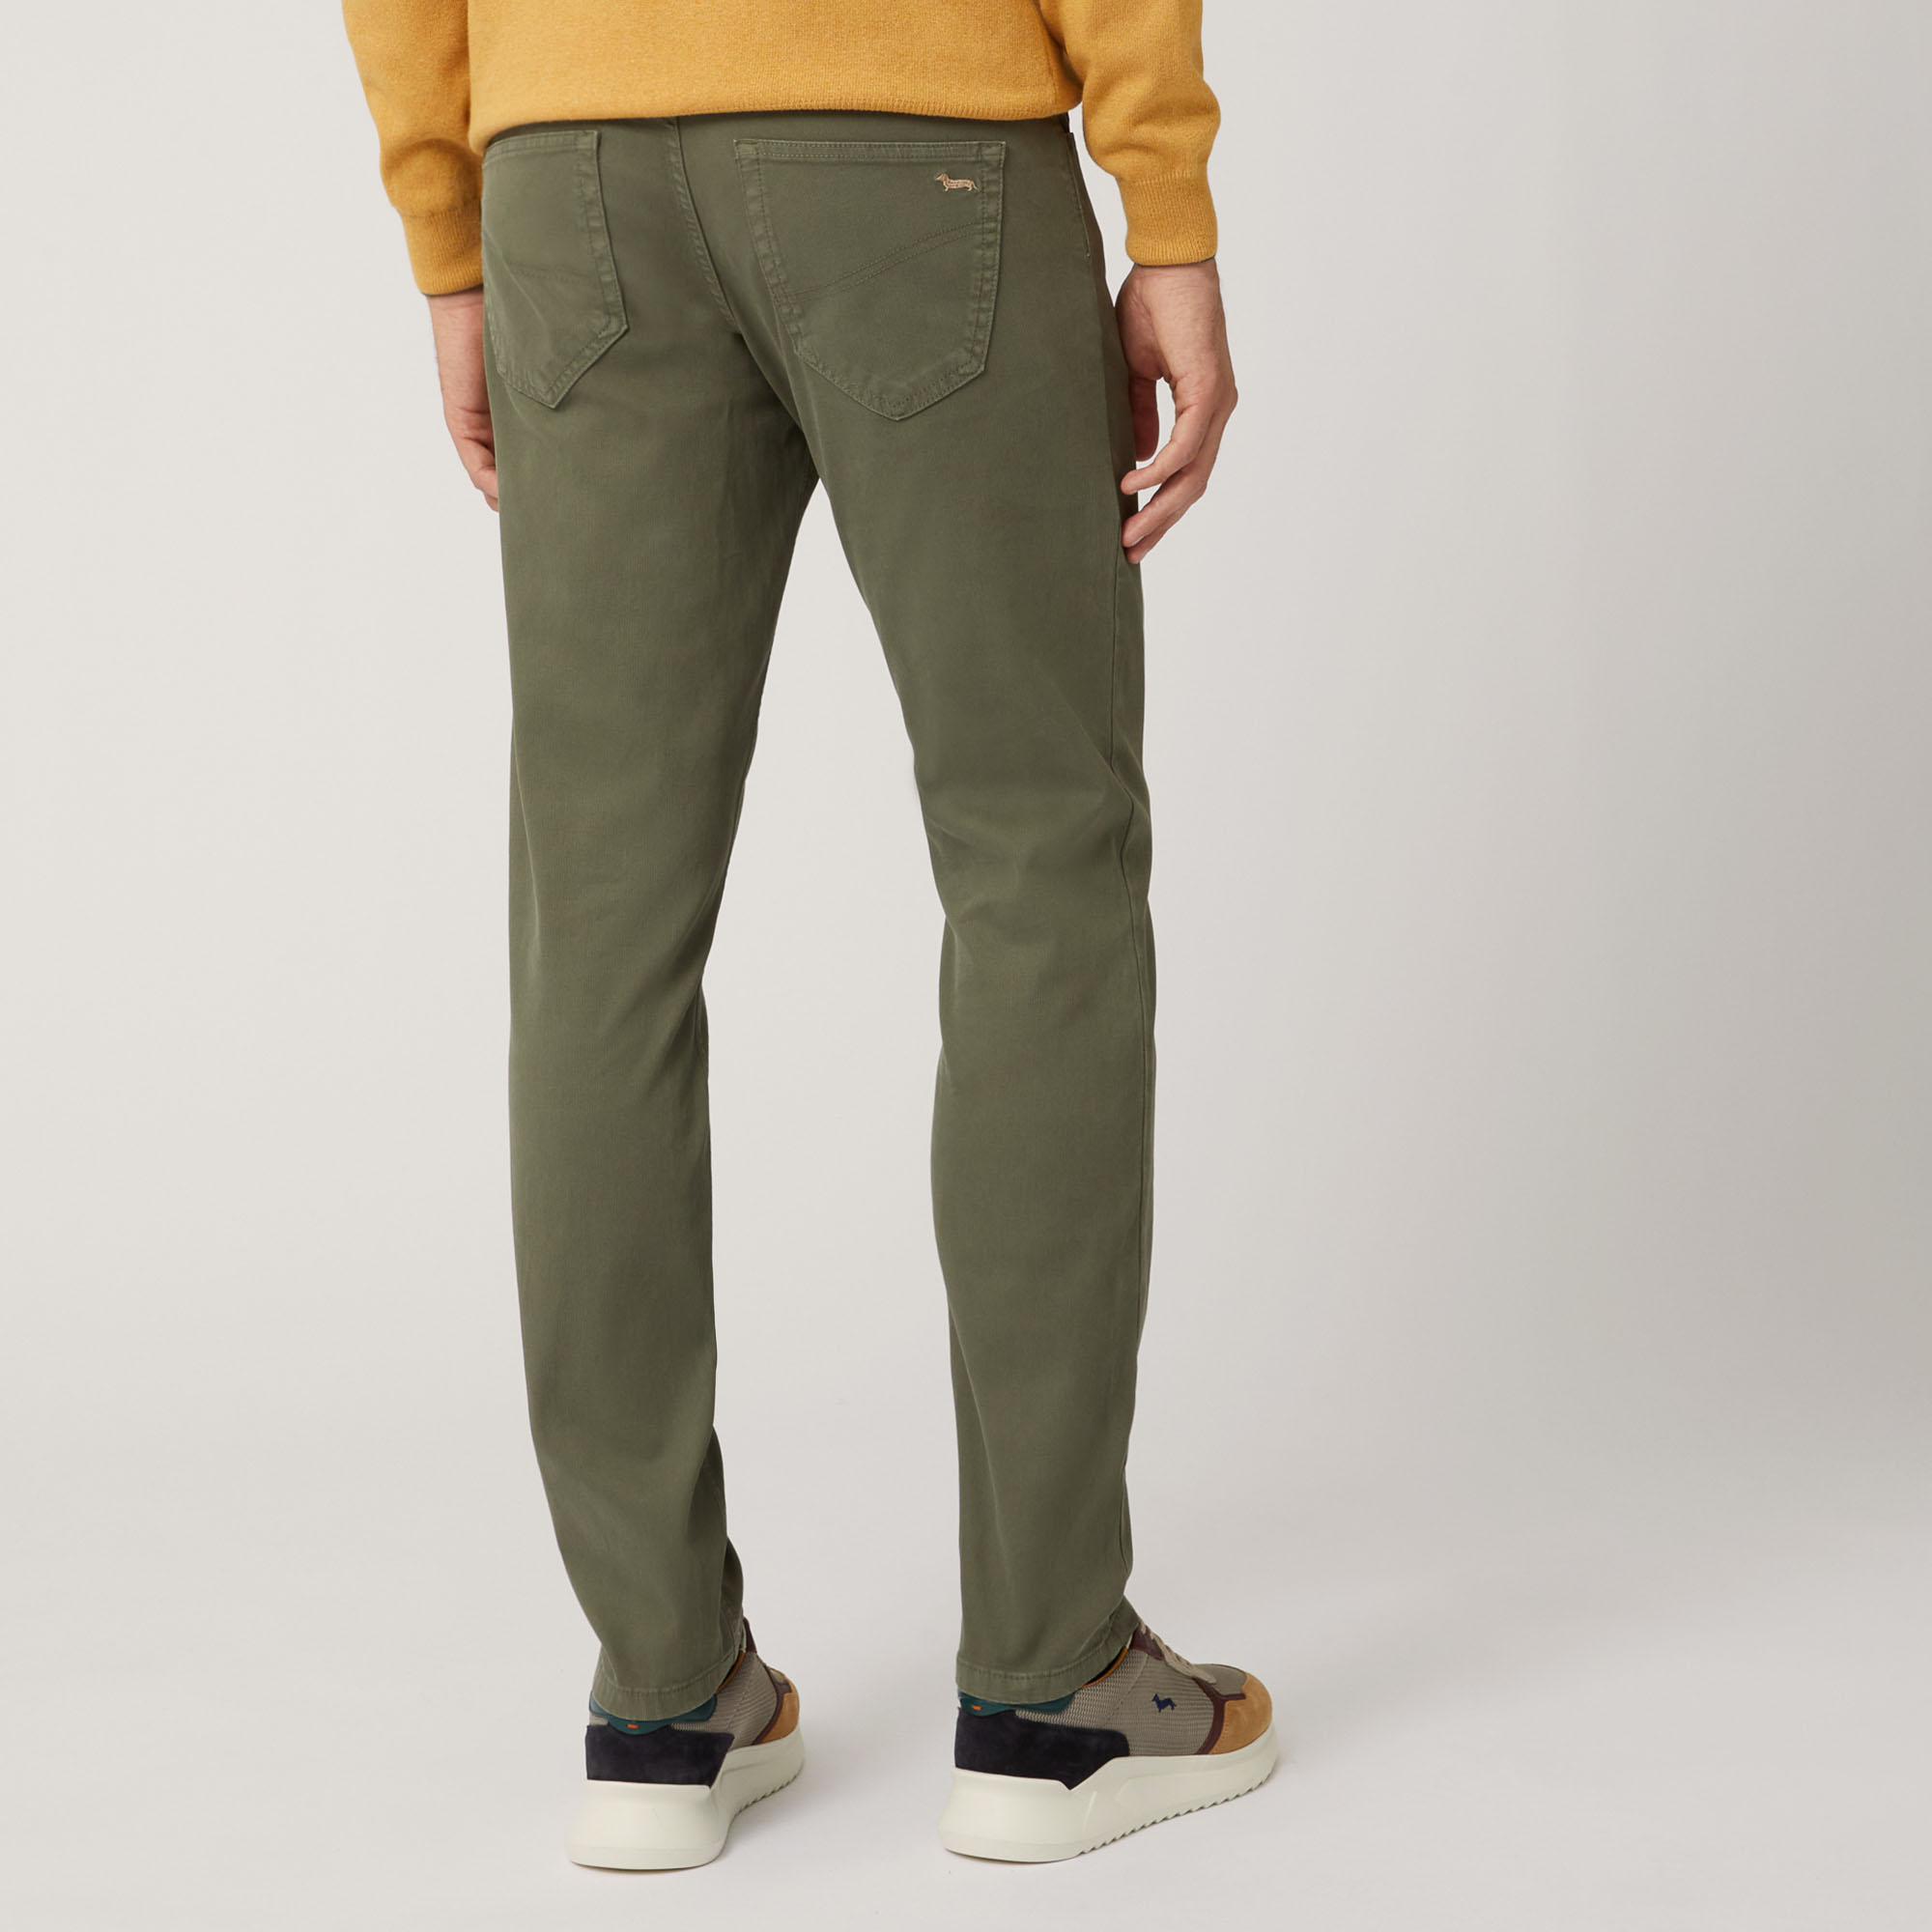 Pantalone Cinque Tasche Narrow Fit, Verde Oliva, large